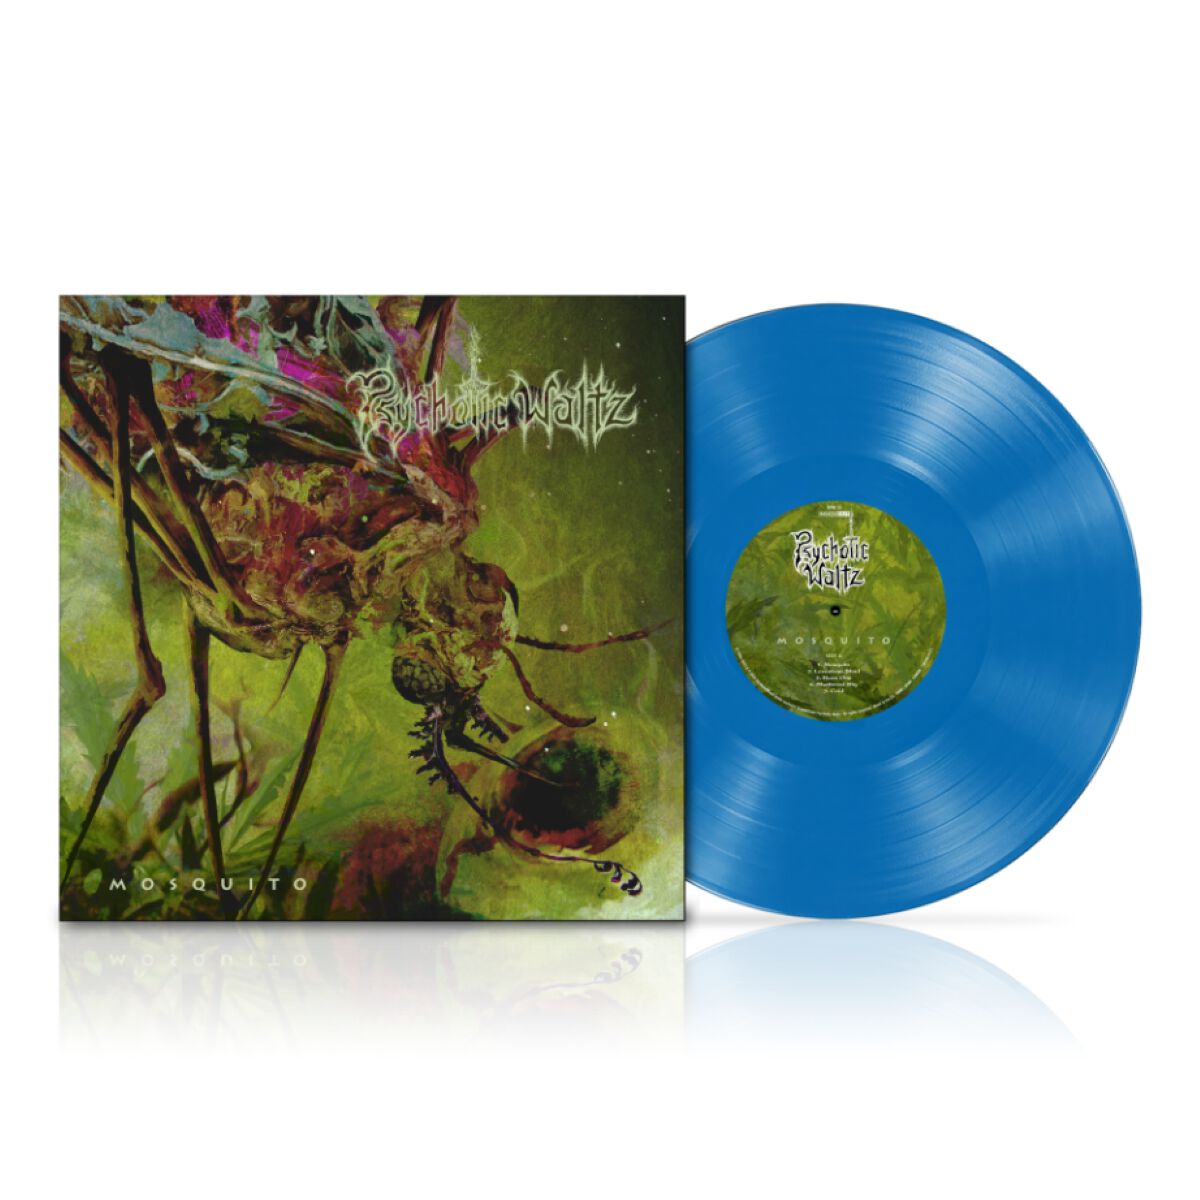 Mosquito von Psychotic Waltz - LP (Coloured, Limited Edition, Re-Release, Standard)